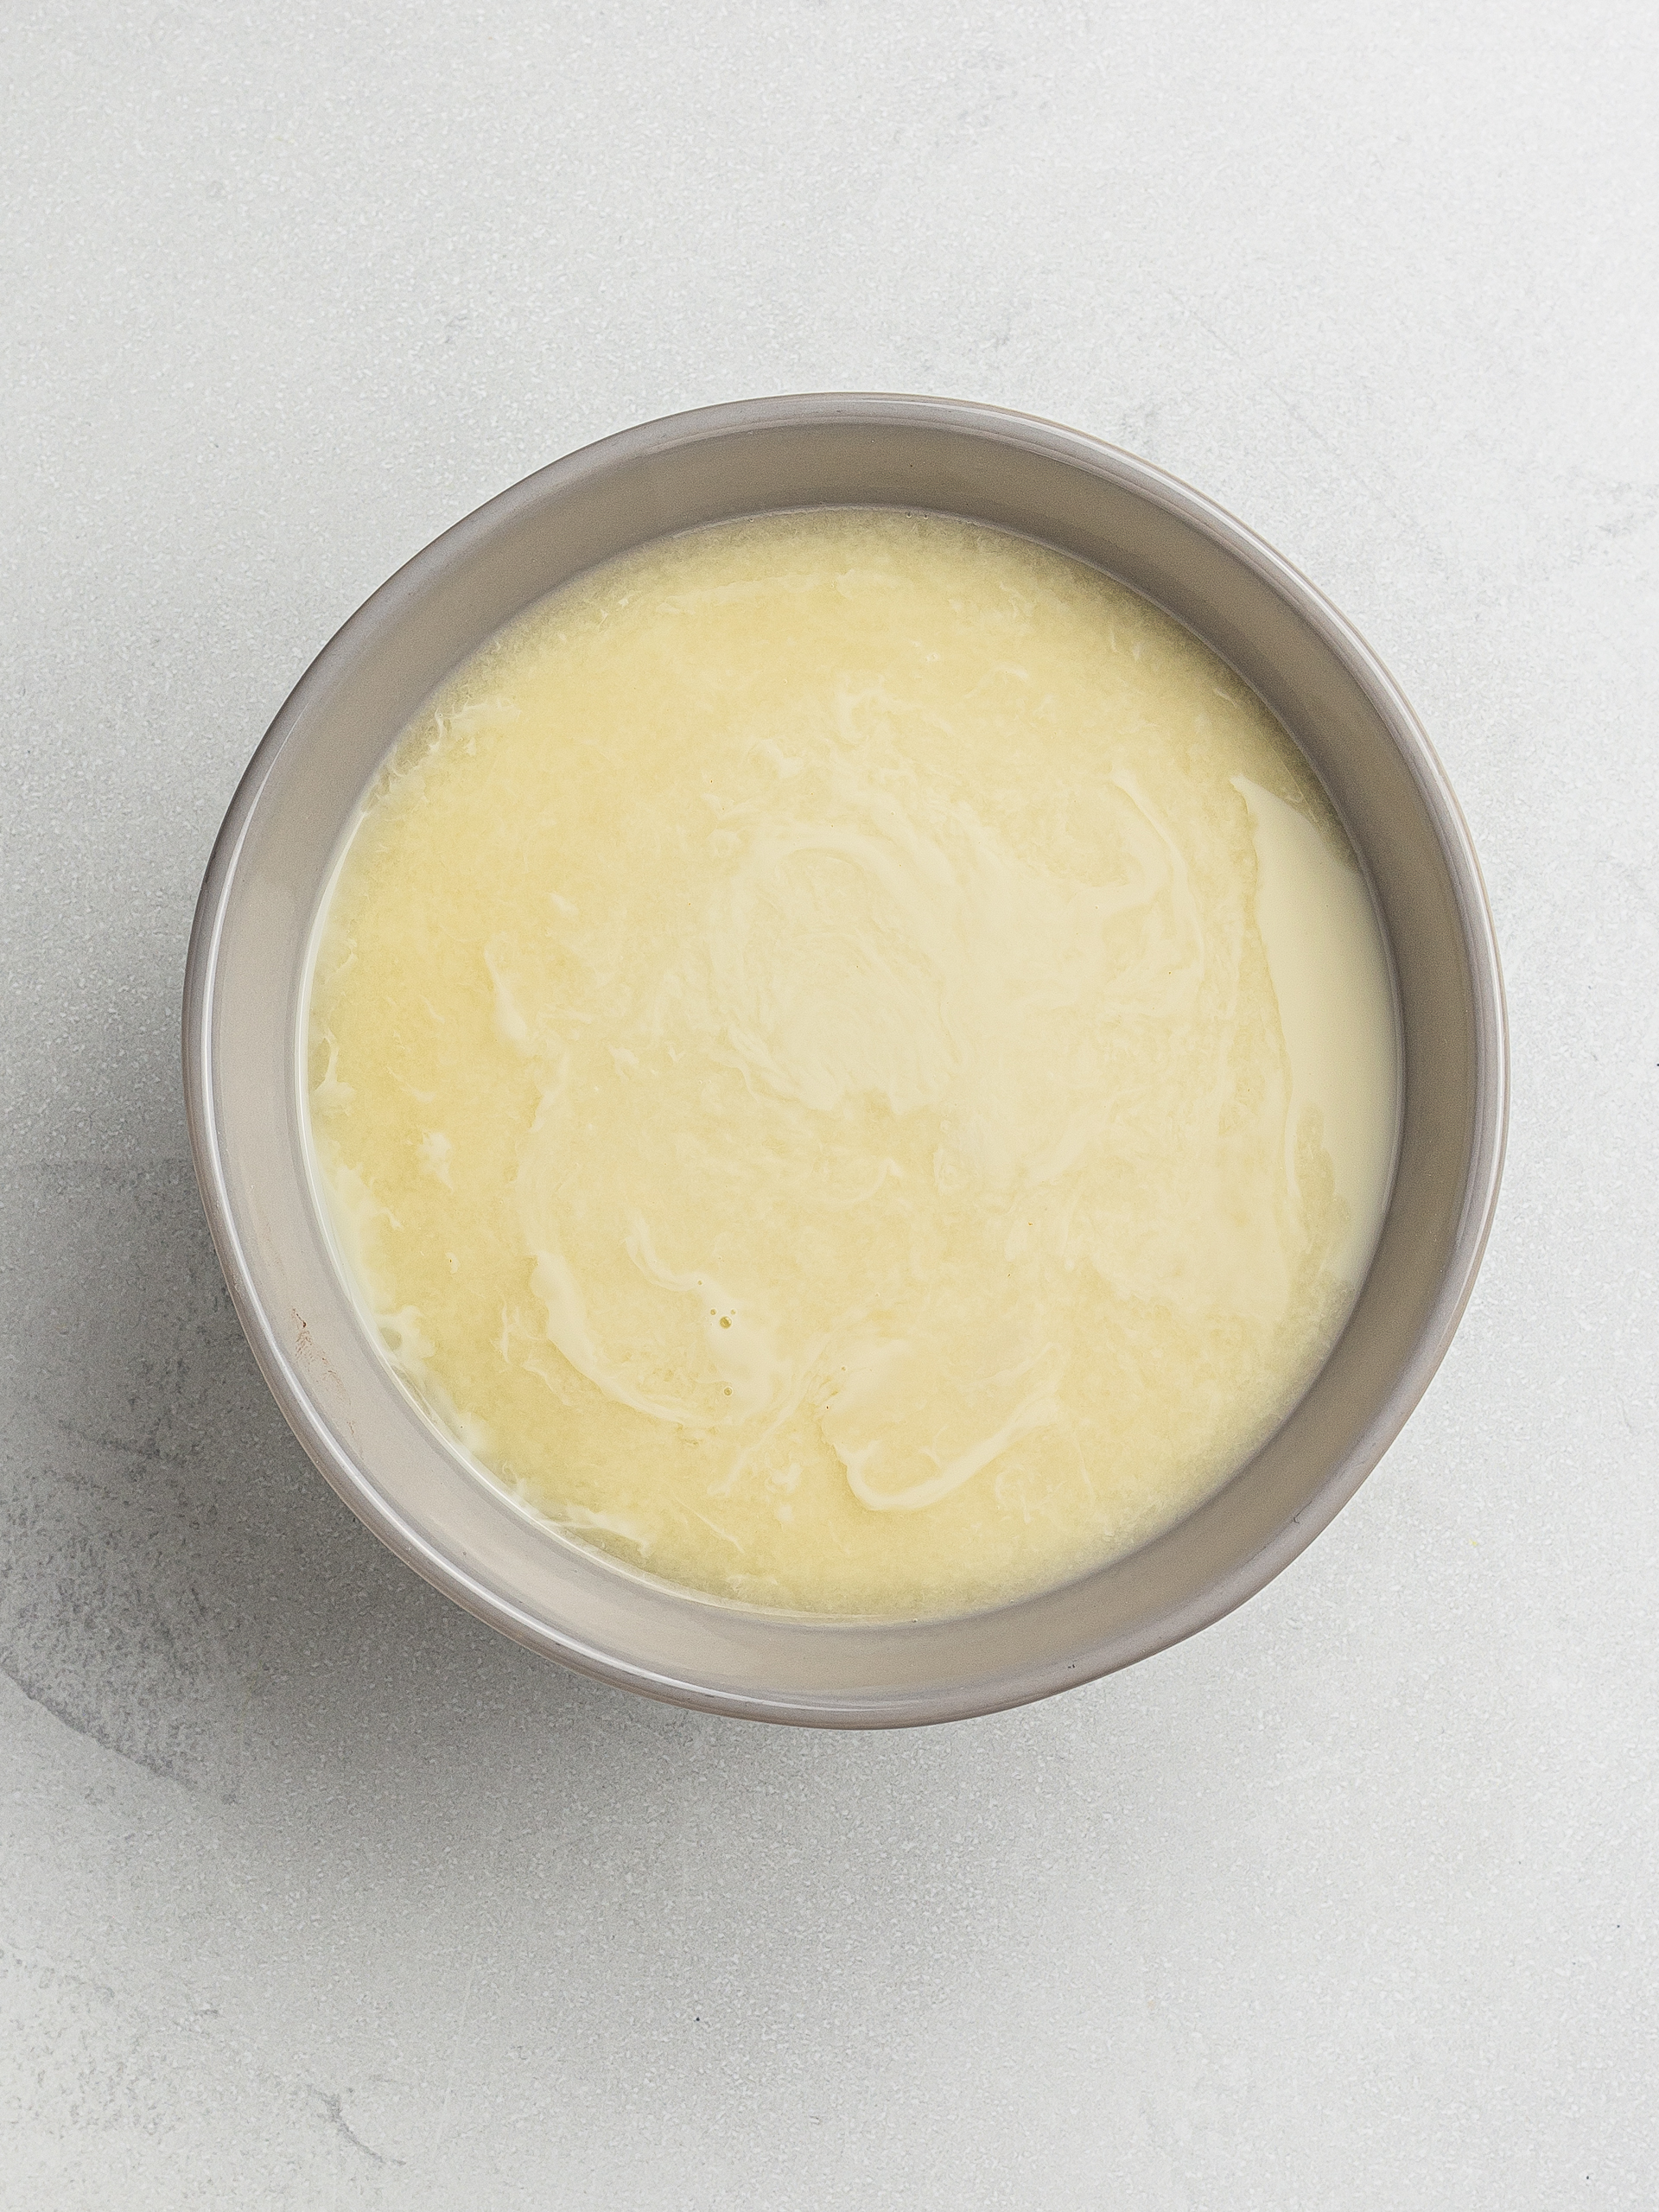 vegan buttermilk with vinegar and oat milk